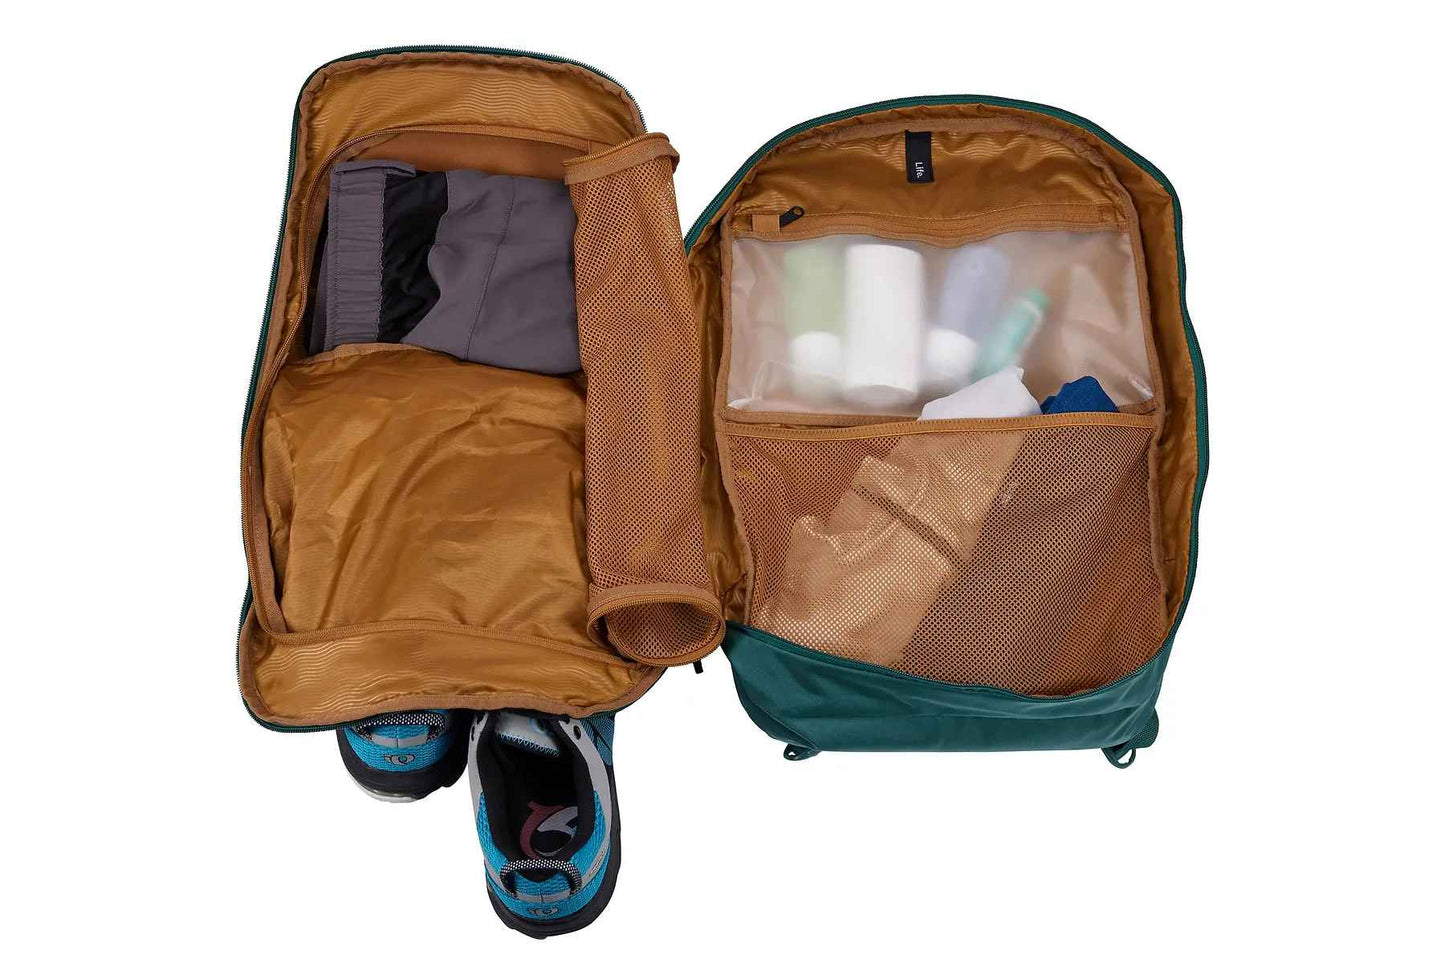 Backpack 30L Thule EnRoute TEBP-4416 Mallard green